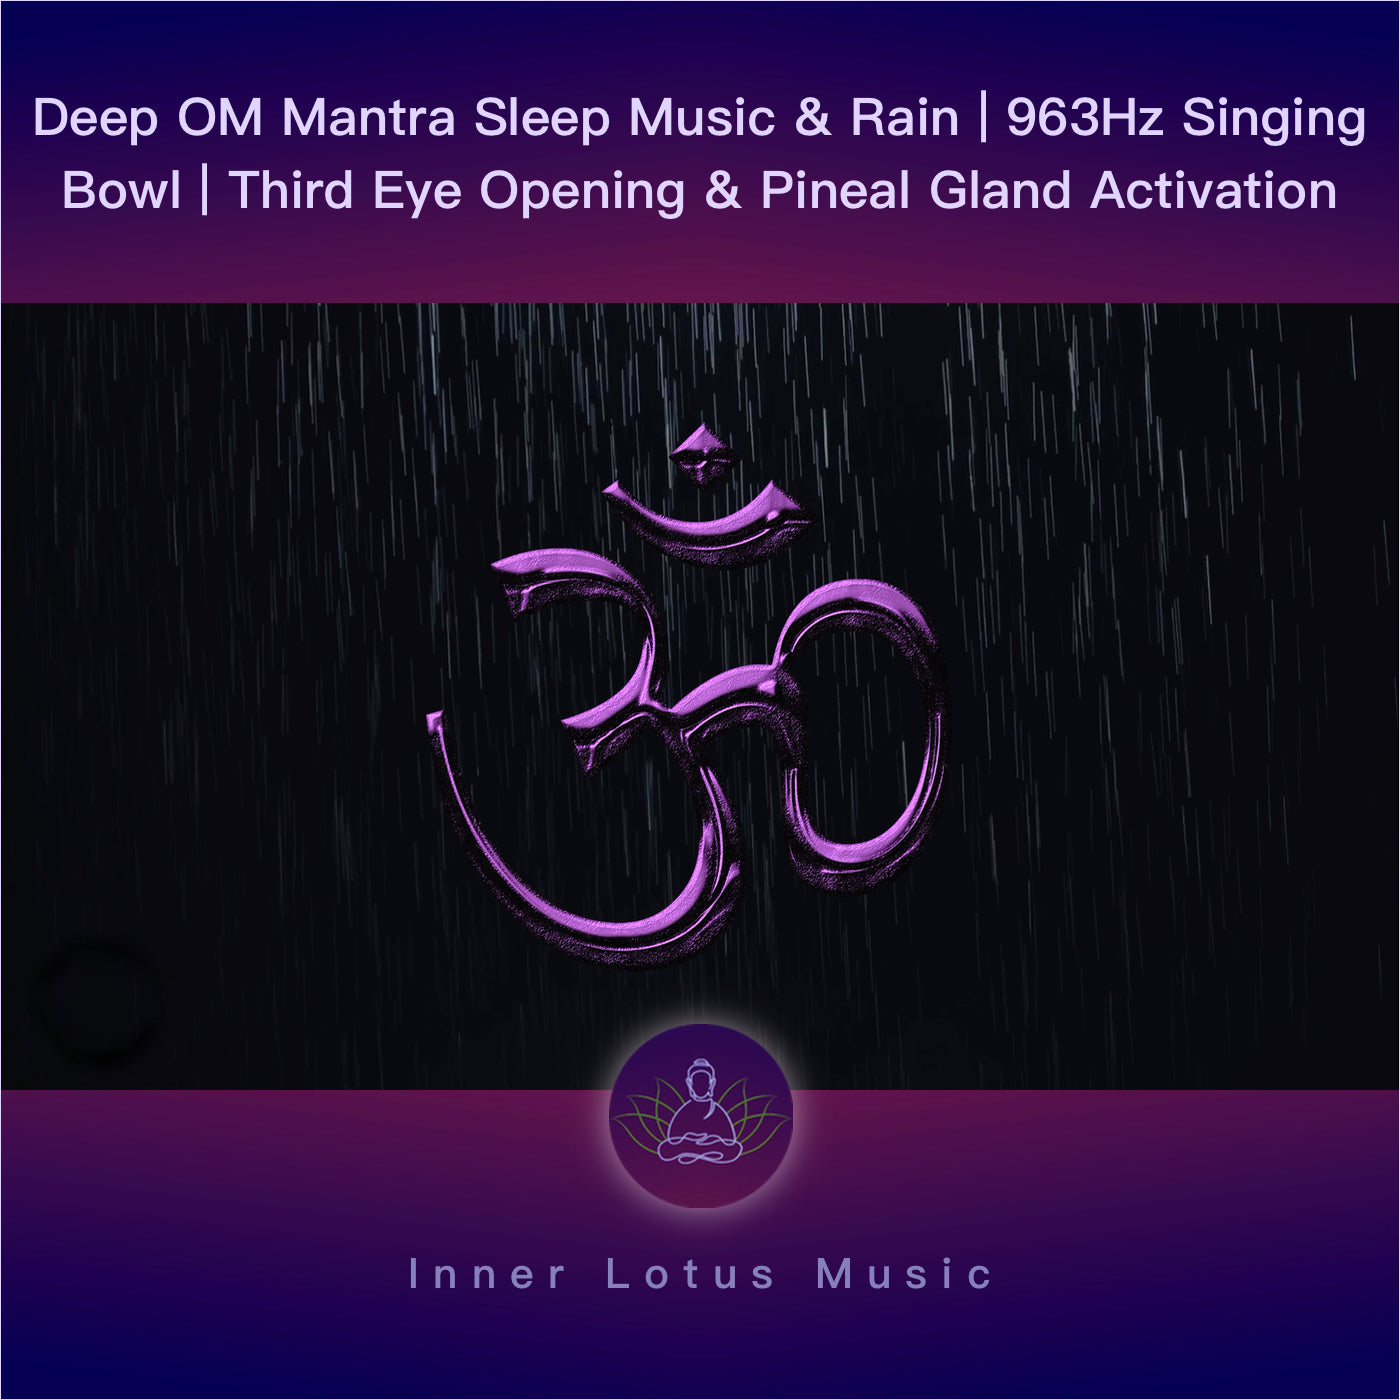 Deep OM Mantra Sleep Music & Rain | 963Hz Singing Bowl | Third Eye Opening & Pineal Gland Activation